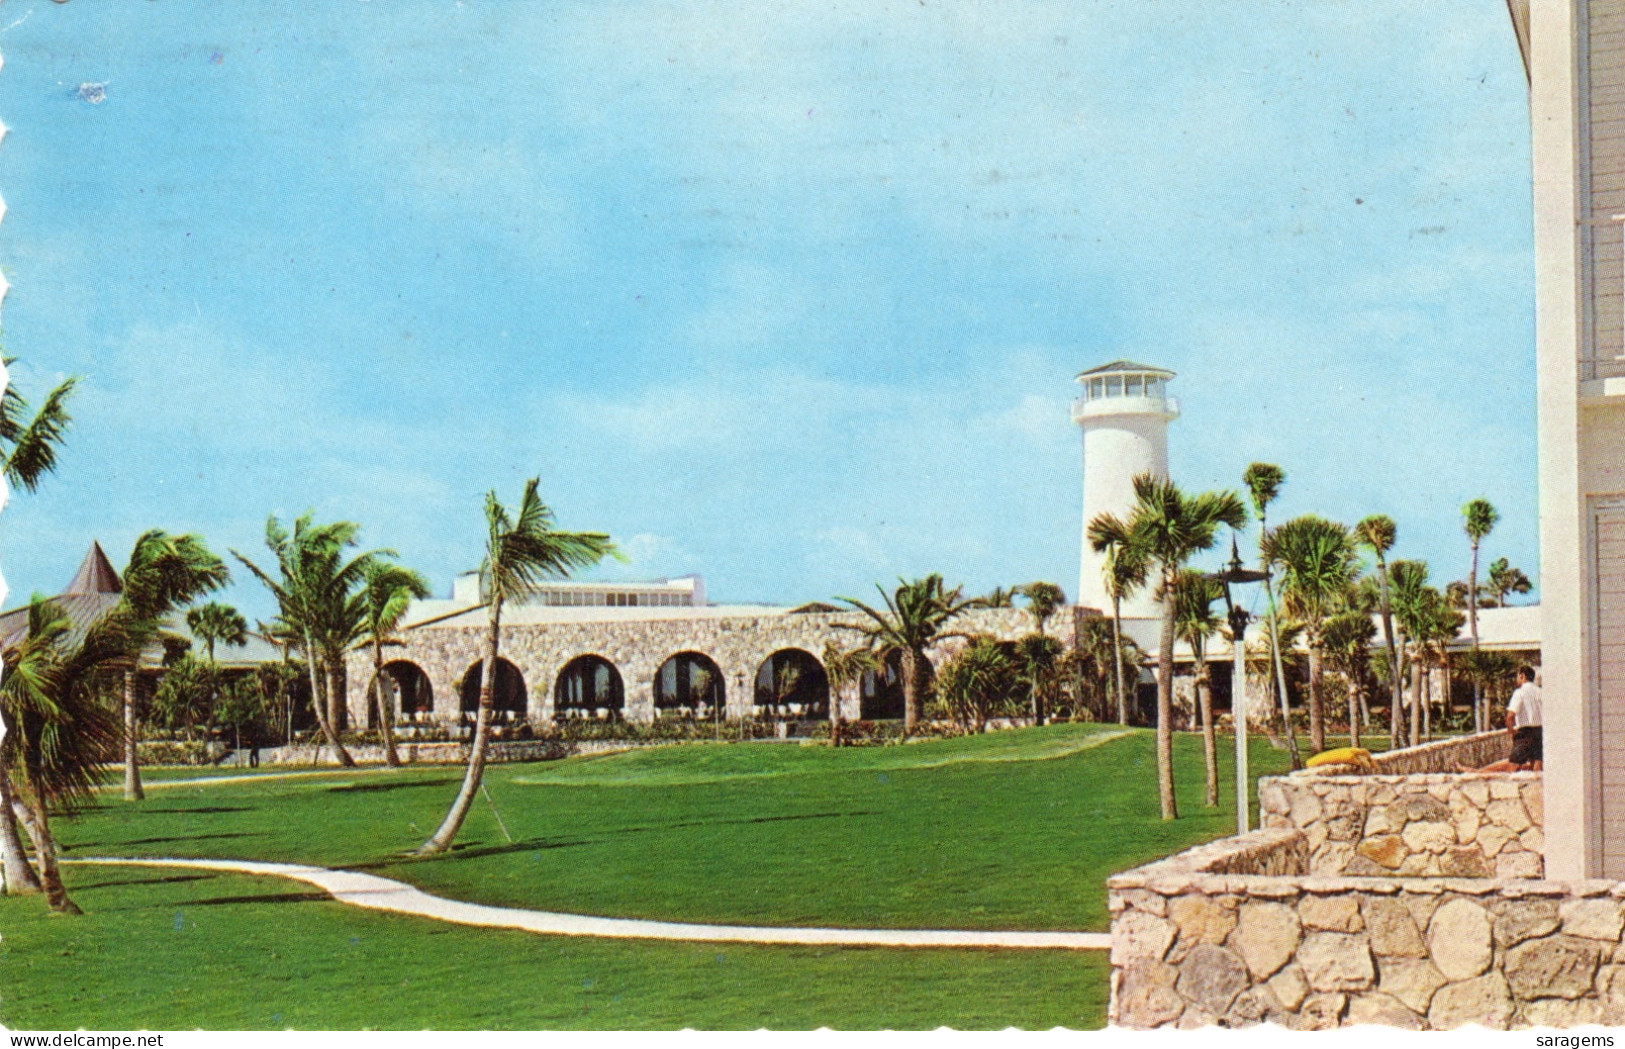 Lucia,Bahamas-Lucayan Hotel And Casino 1965 - Antique Postcard - Bahamas